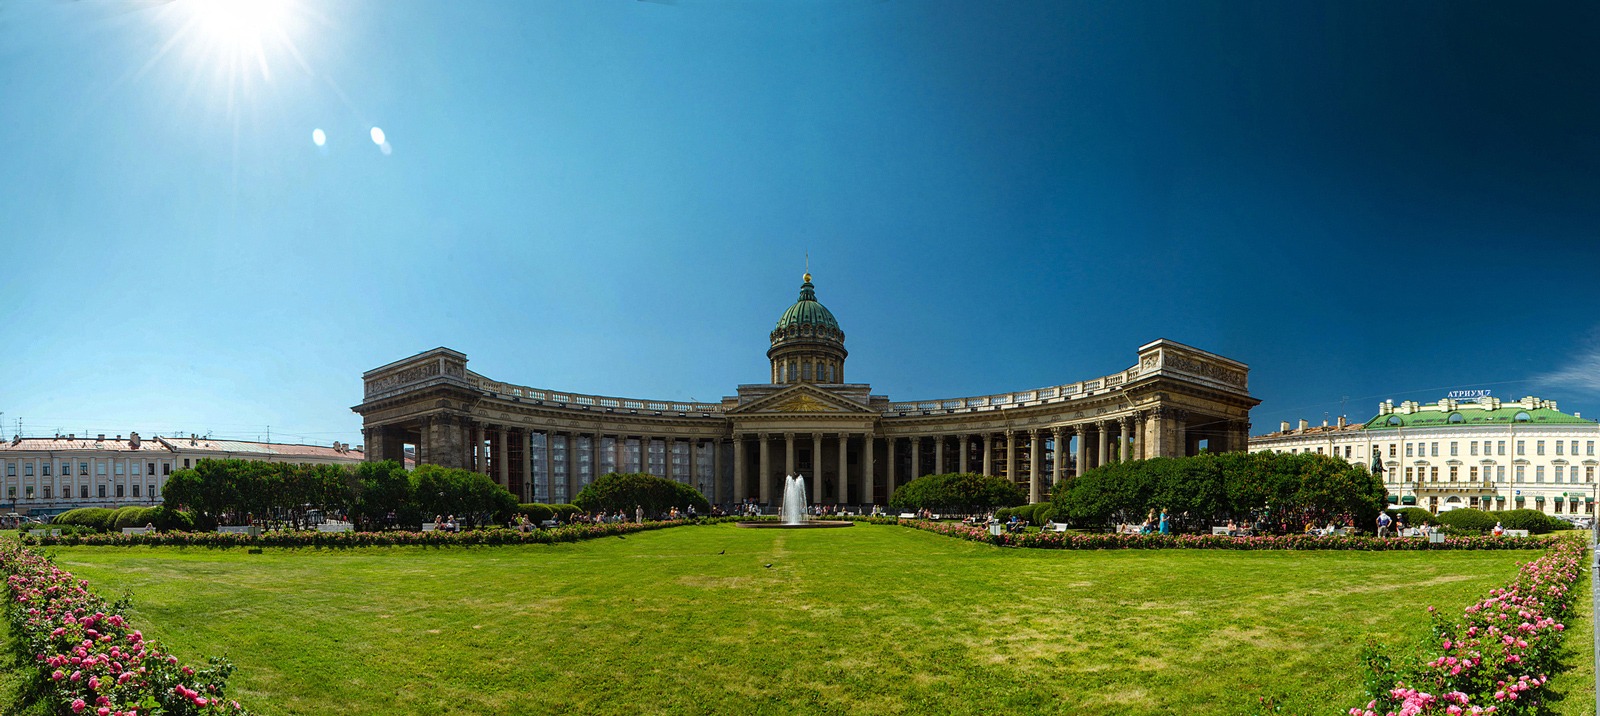 Панорама Казанского собора | Фотограф Евгений Слободенюк | foto.by фото.бай